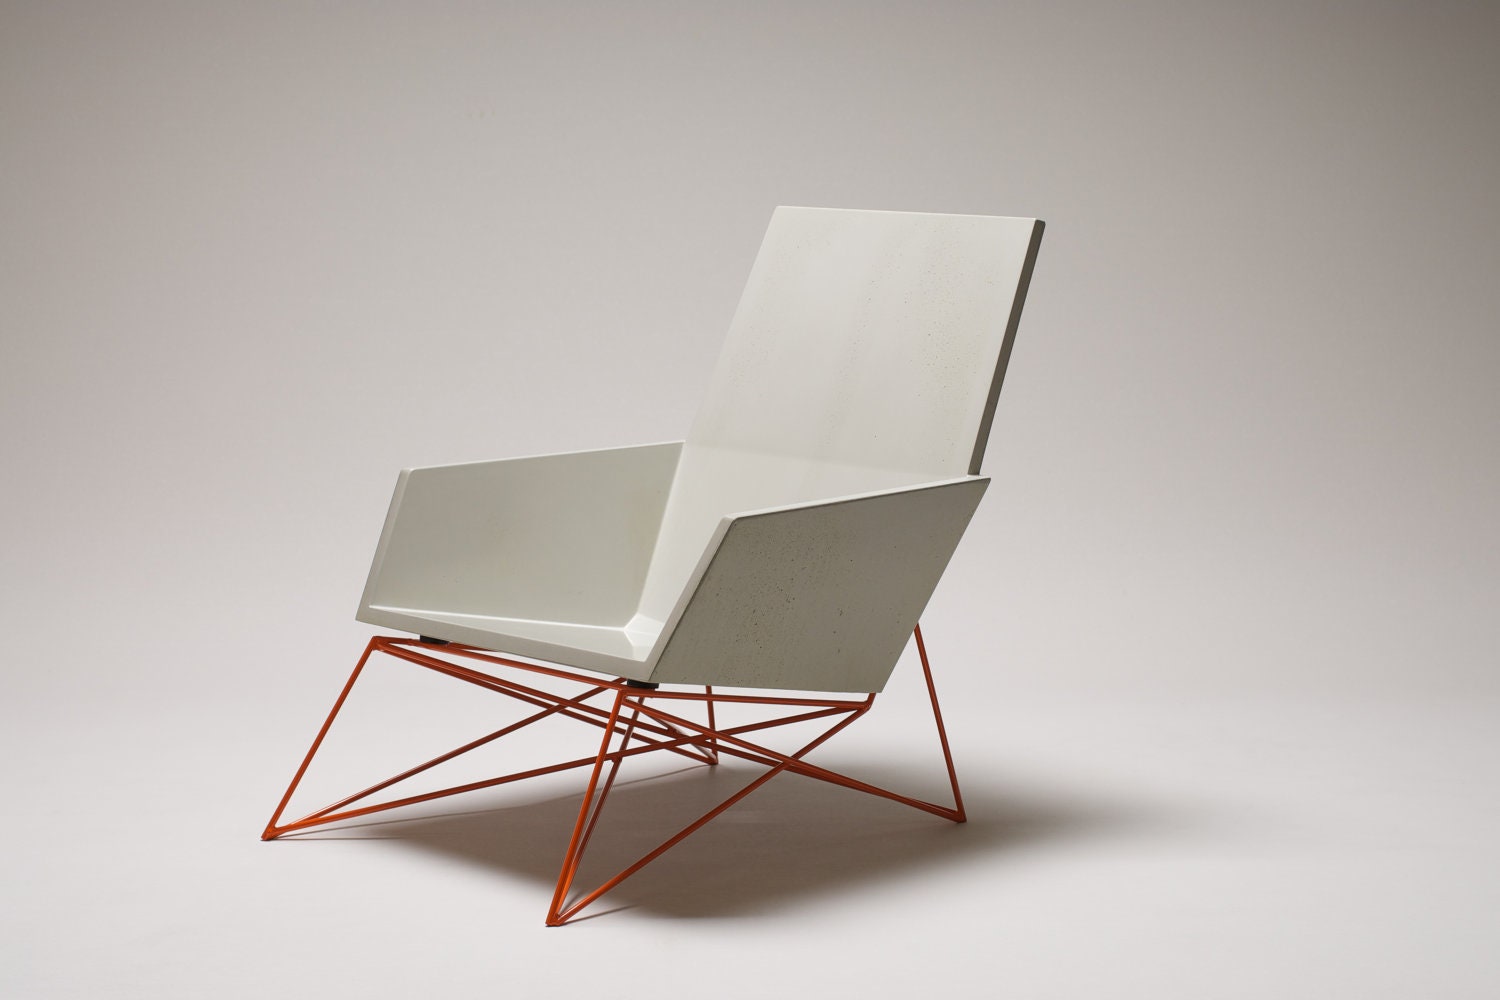 Hard Goods 'Modern Muskoka' Outdoor Chair / Concrete & Steel